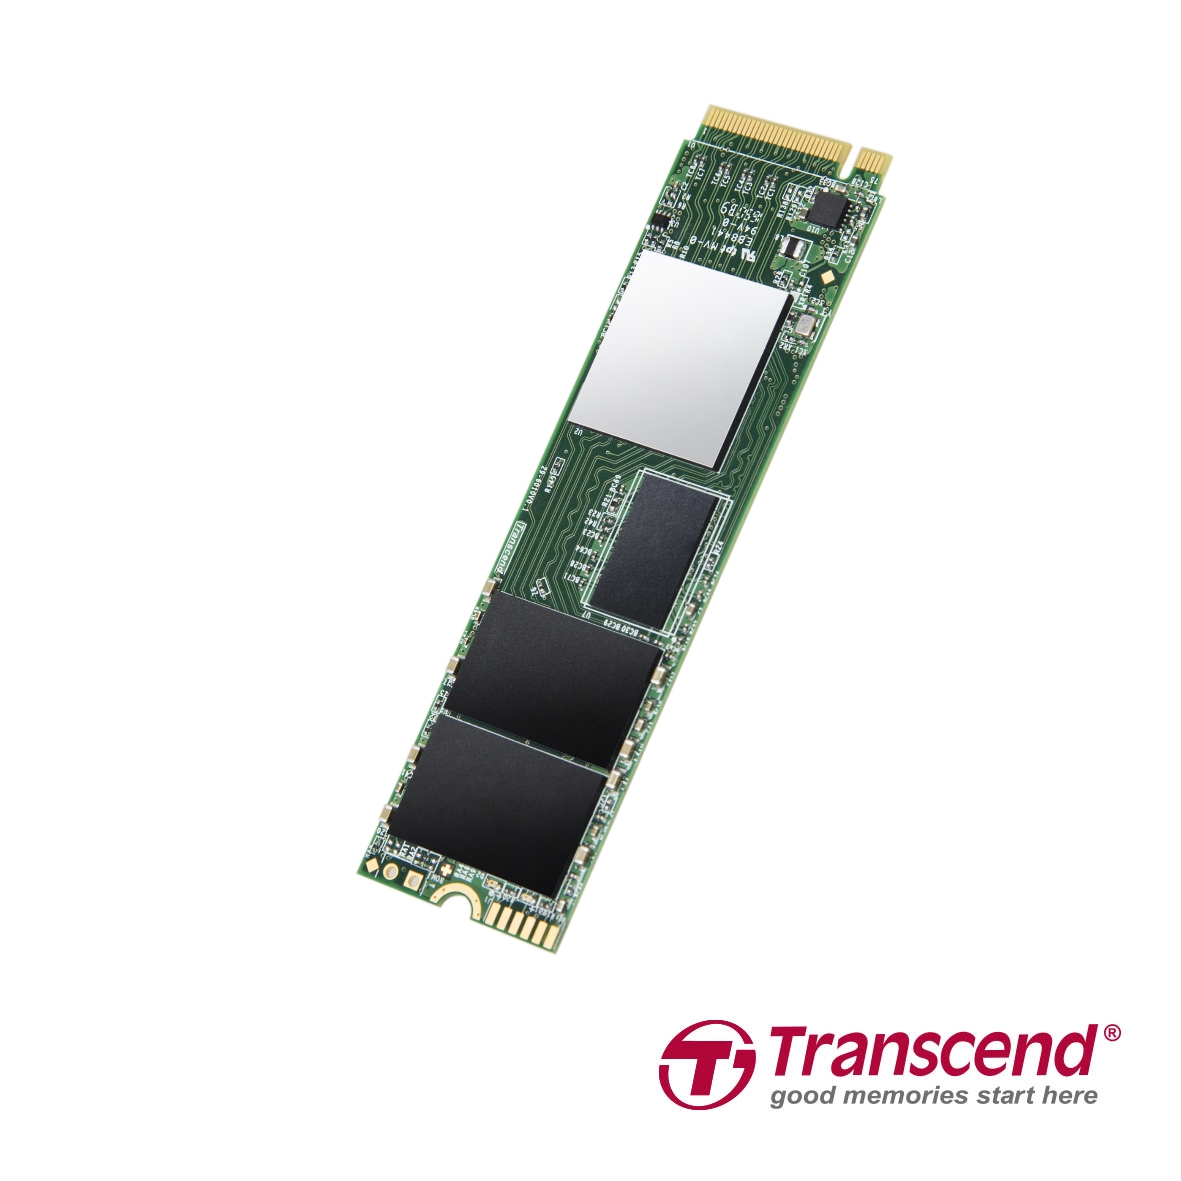 Transcend представляет SSD MTE820 в форм-факторе M.2 с интерфейсом PCIe NVMe